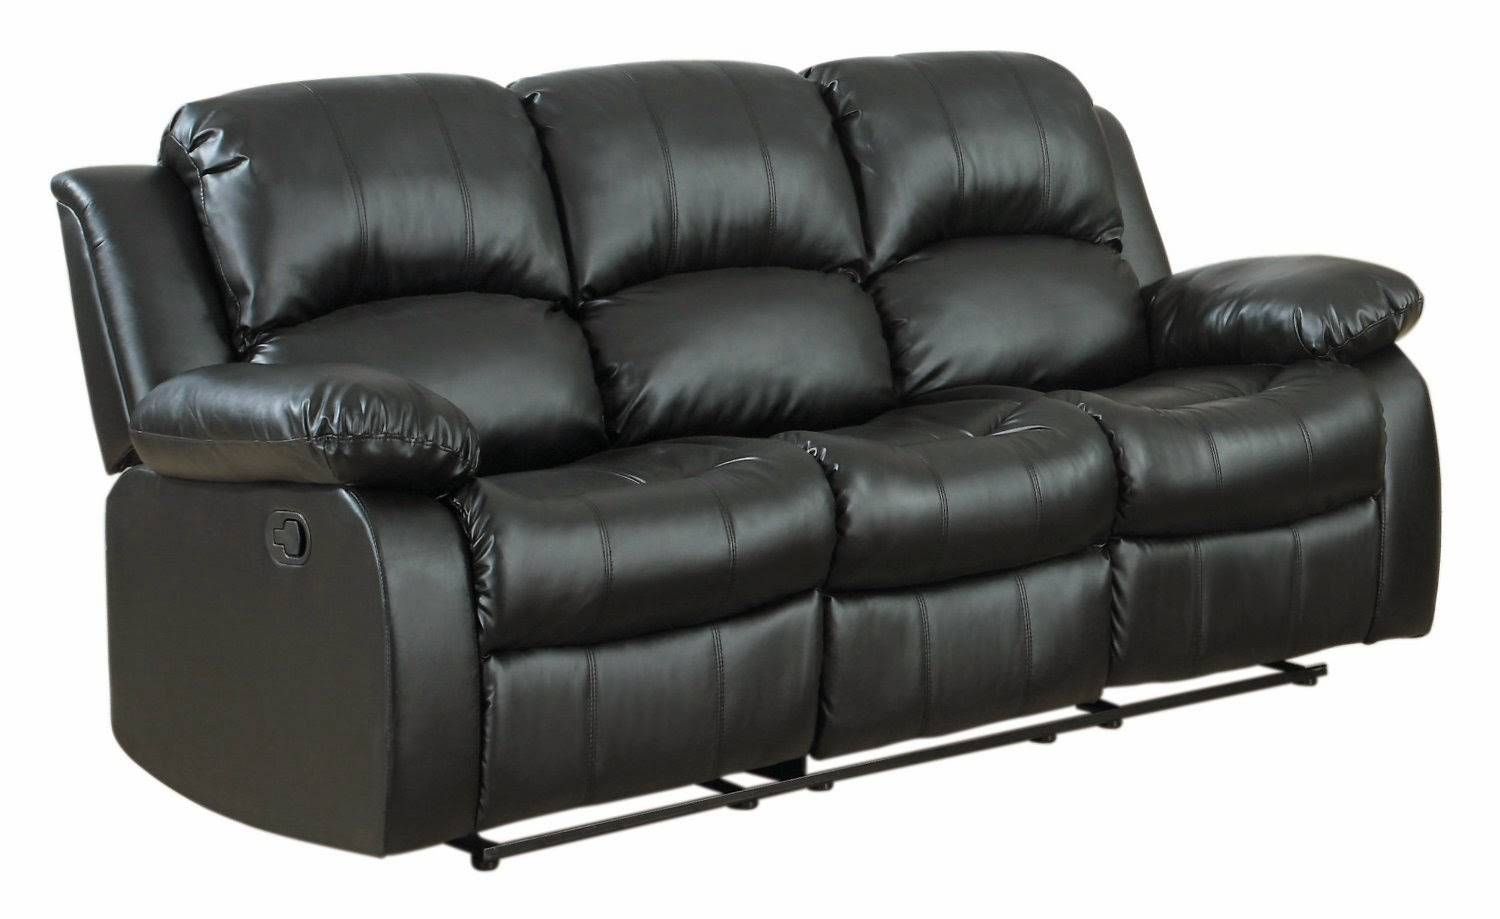 Reclining Sofas For Sale: Berkline Leather Reclining Sofa Costco With Regard To Berkline Recliner Sofas (Photo 5 of 15)